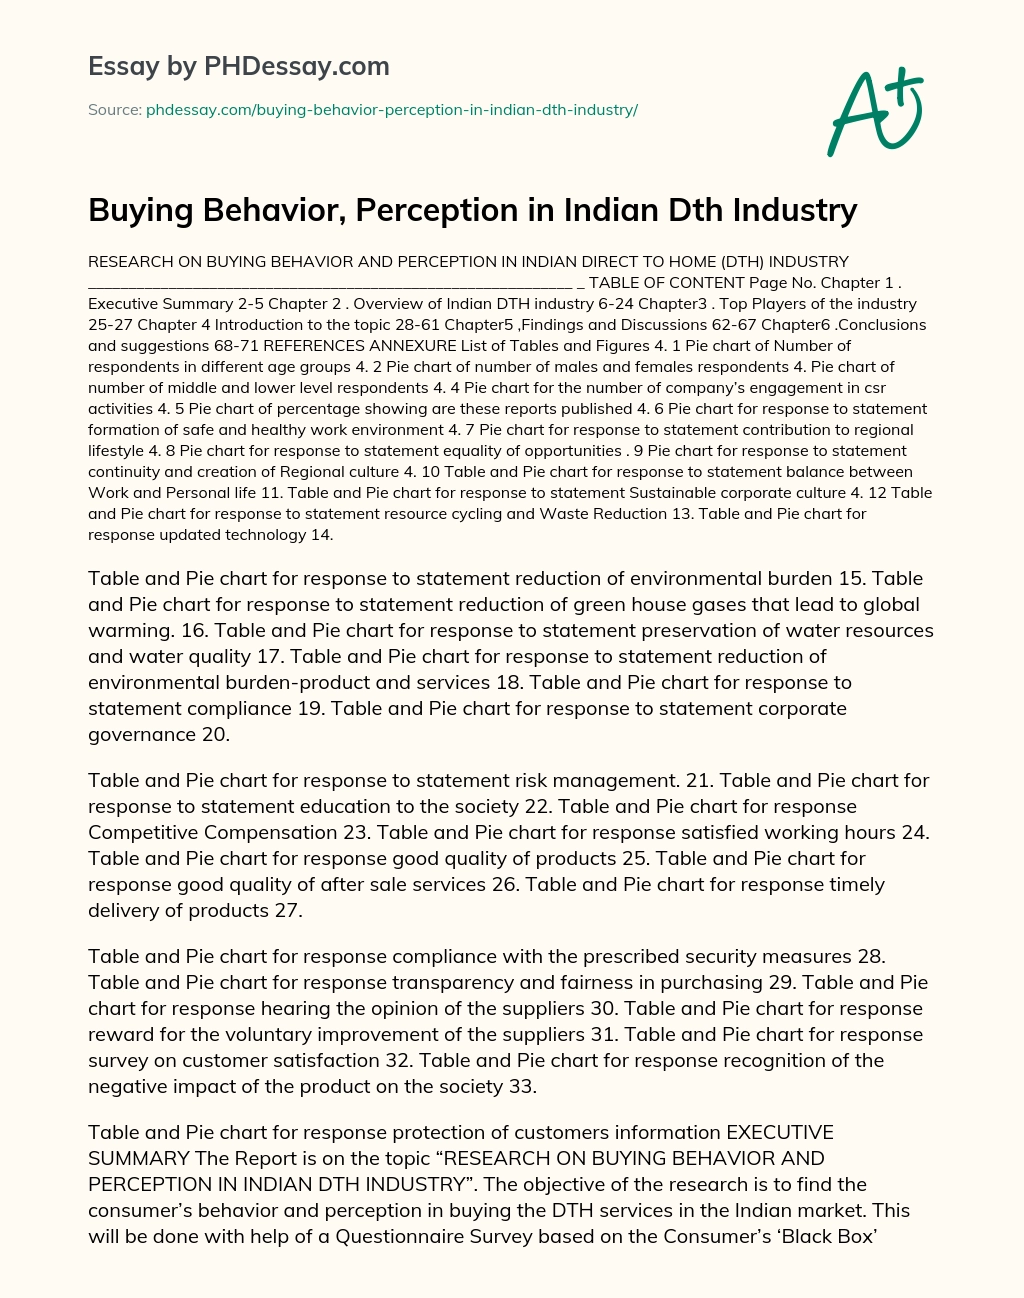 Buying Behavior, Perception in Indian Dth Industry essay